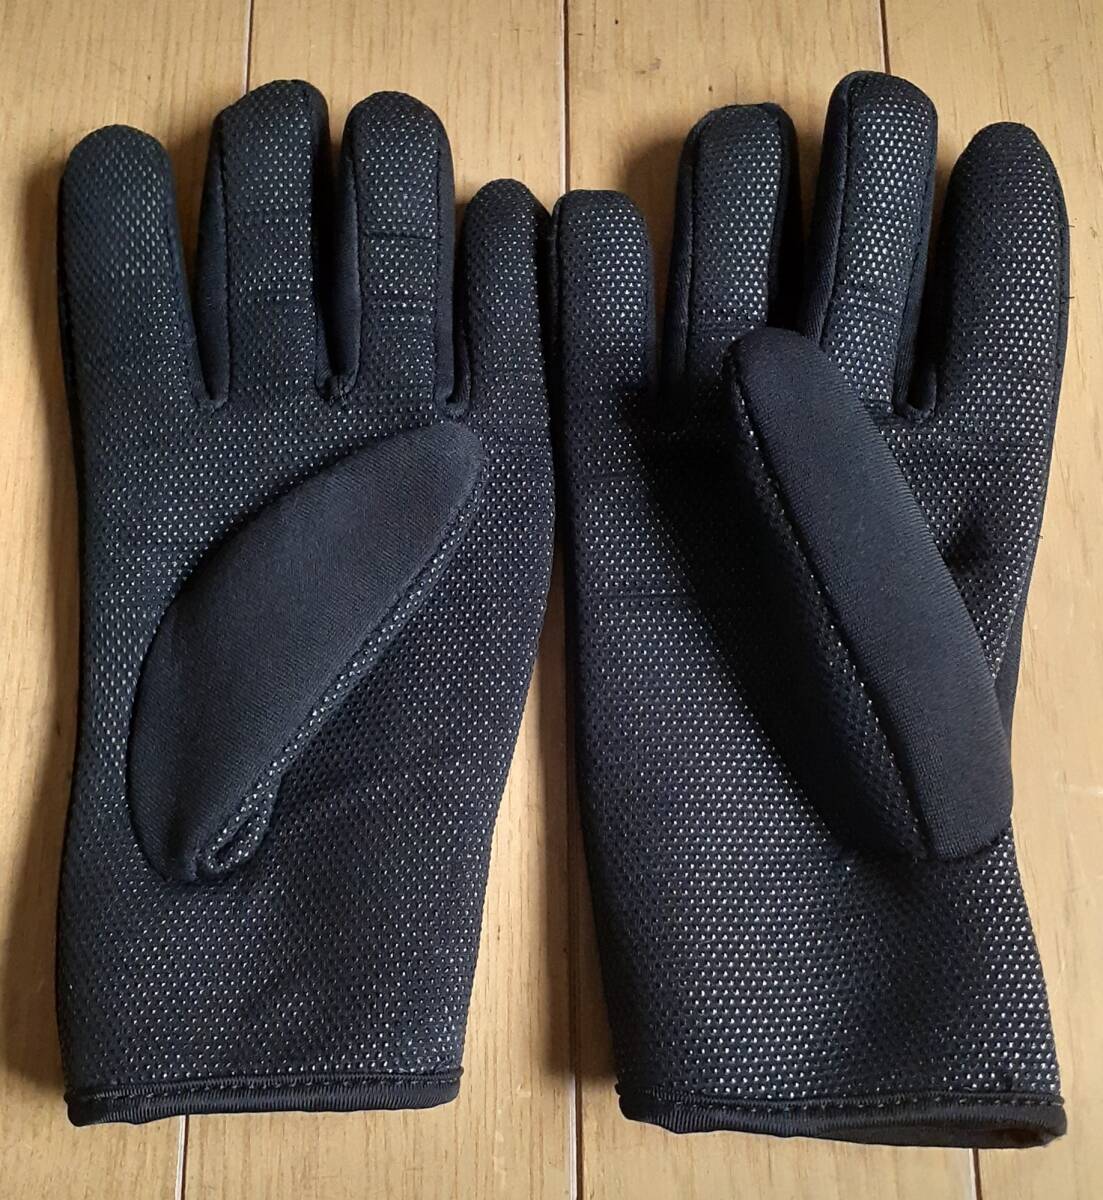  Komine rain glove L size USED